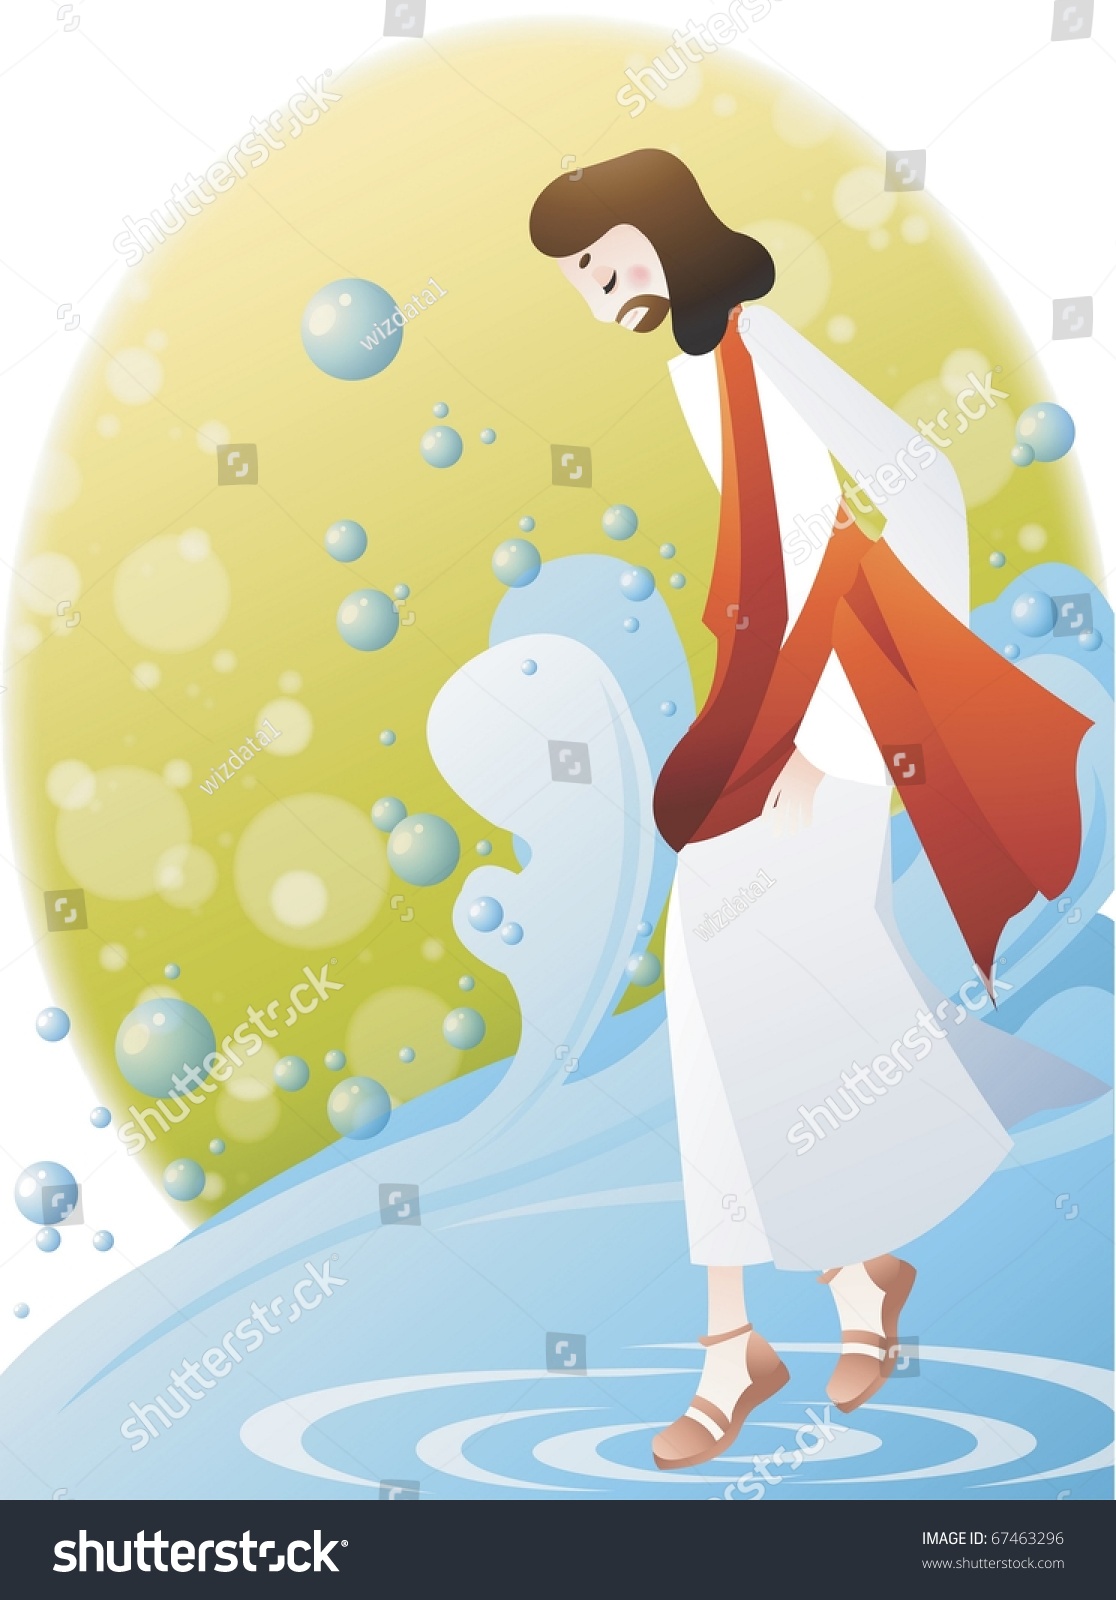 Jesus Walking On Water Stock Vector Illustration 67463296 : Shutterstock